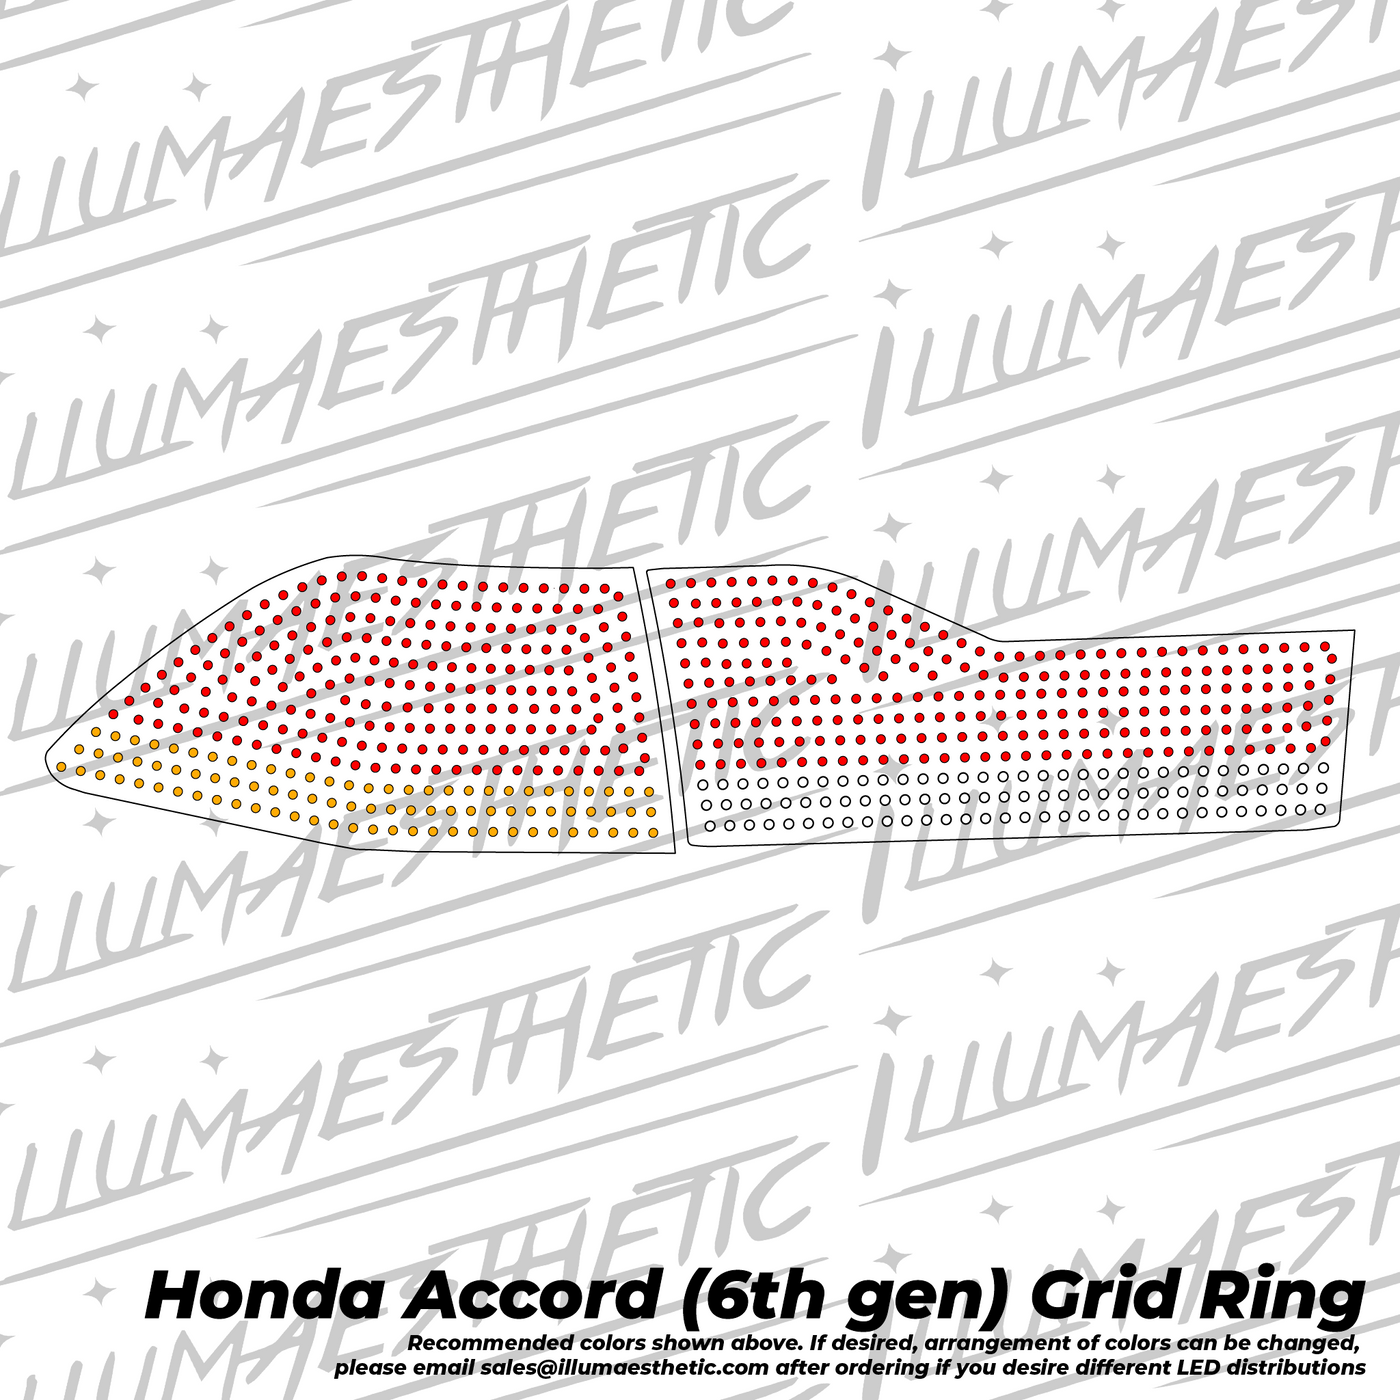 Honda Accord Sedan (CF8 and CG1-CG6, 6th Gen) - Complete DIY Kit